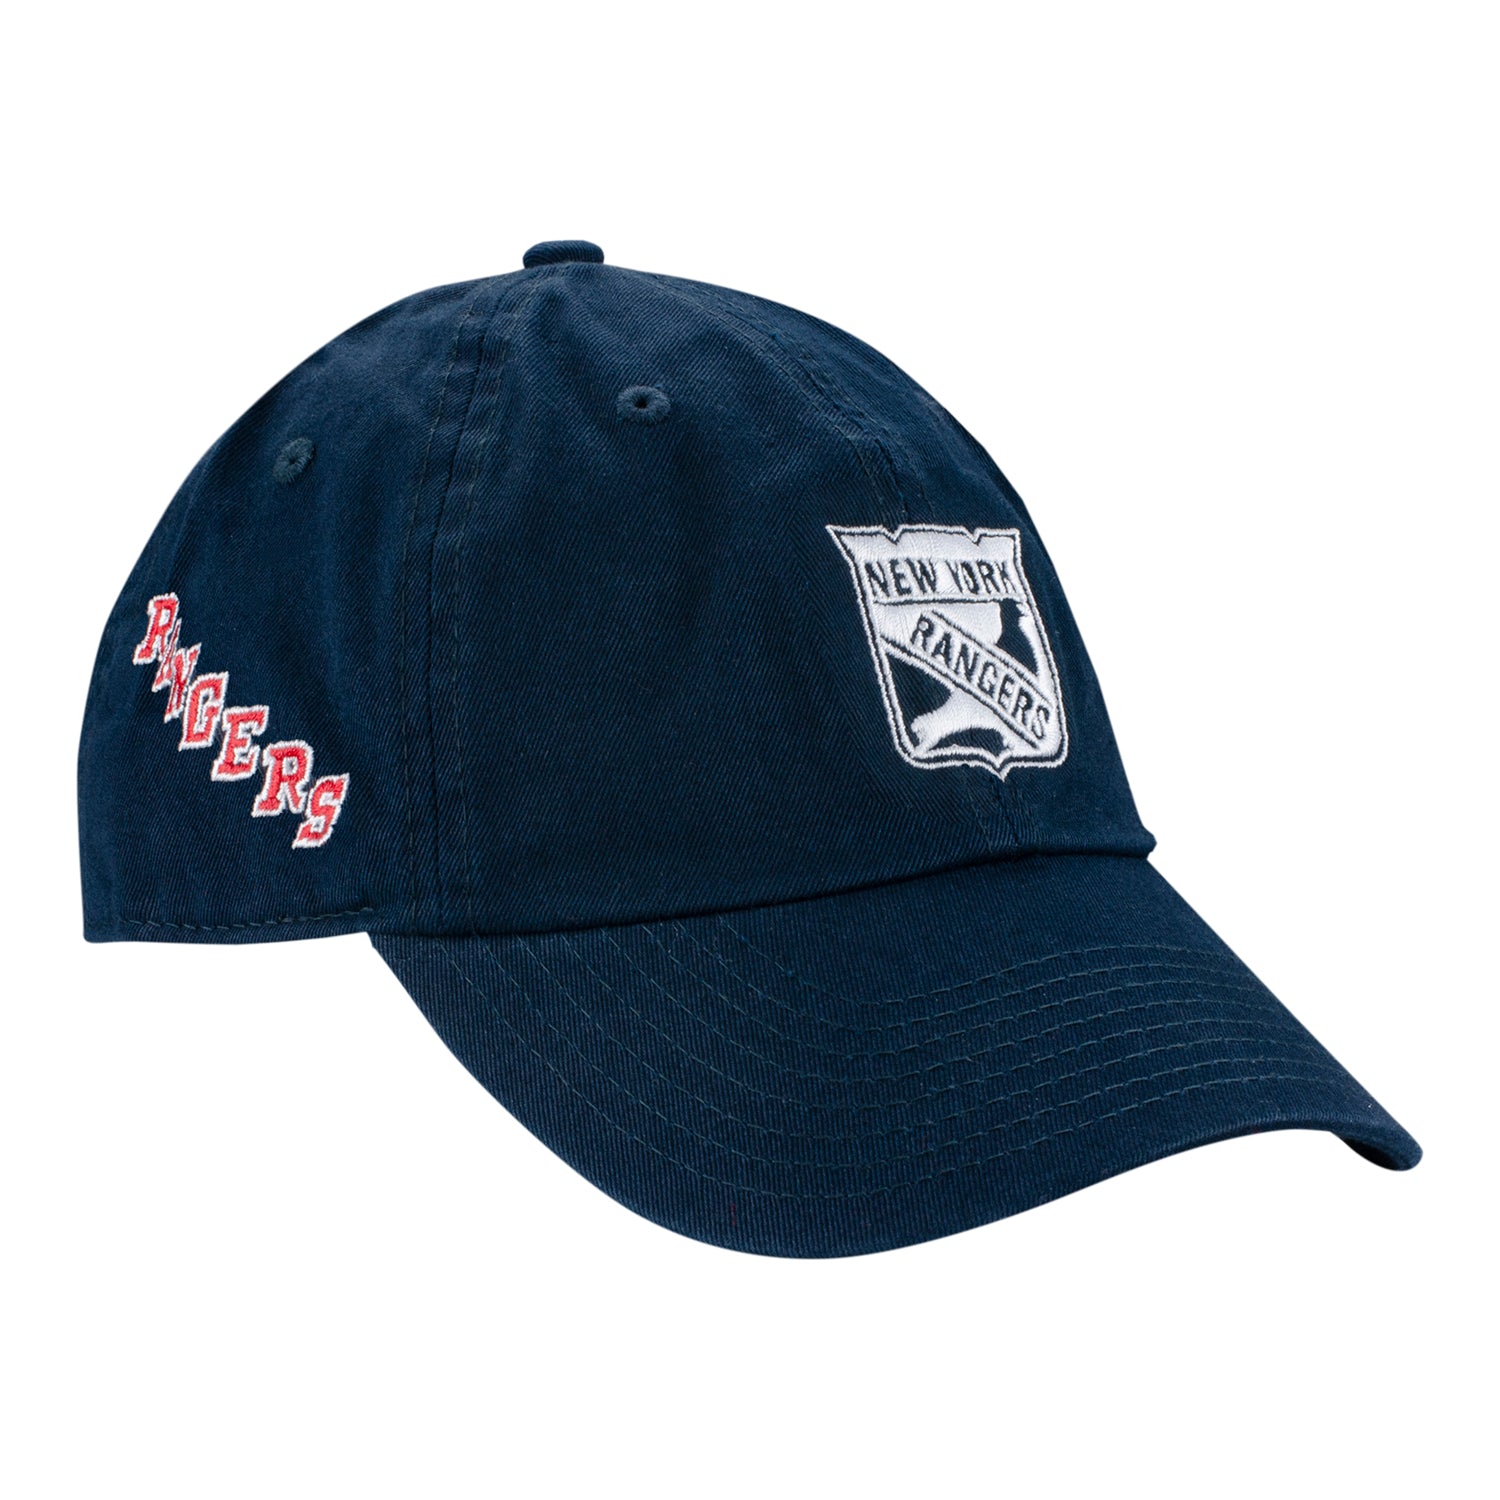 New York Rangers Tuscaloosa Clean Up Vintage Navy 47 Brand Adjustable Hat